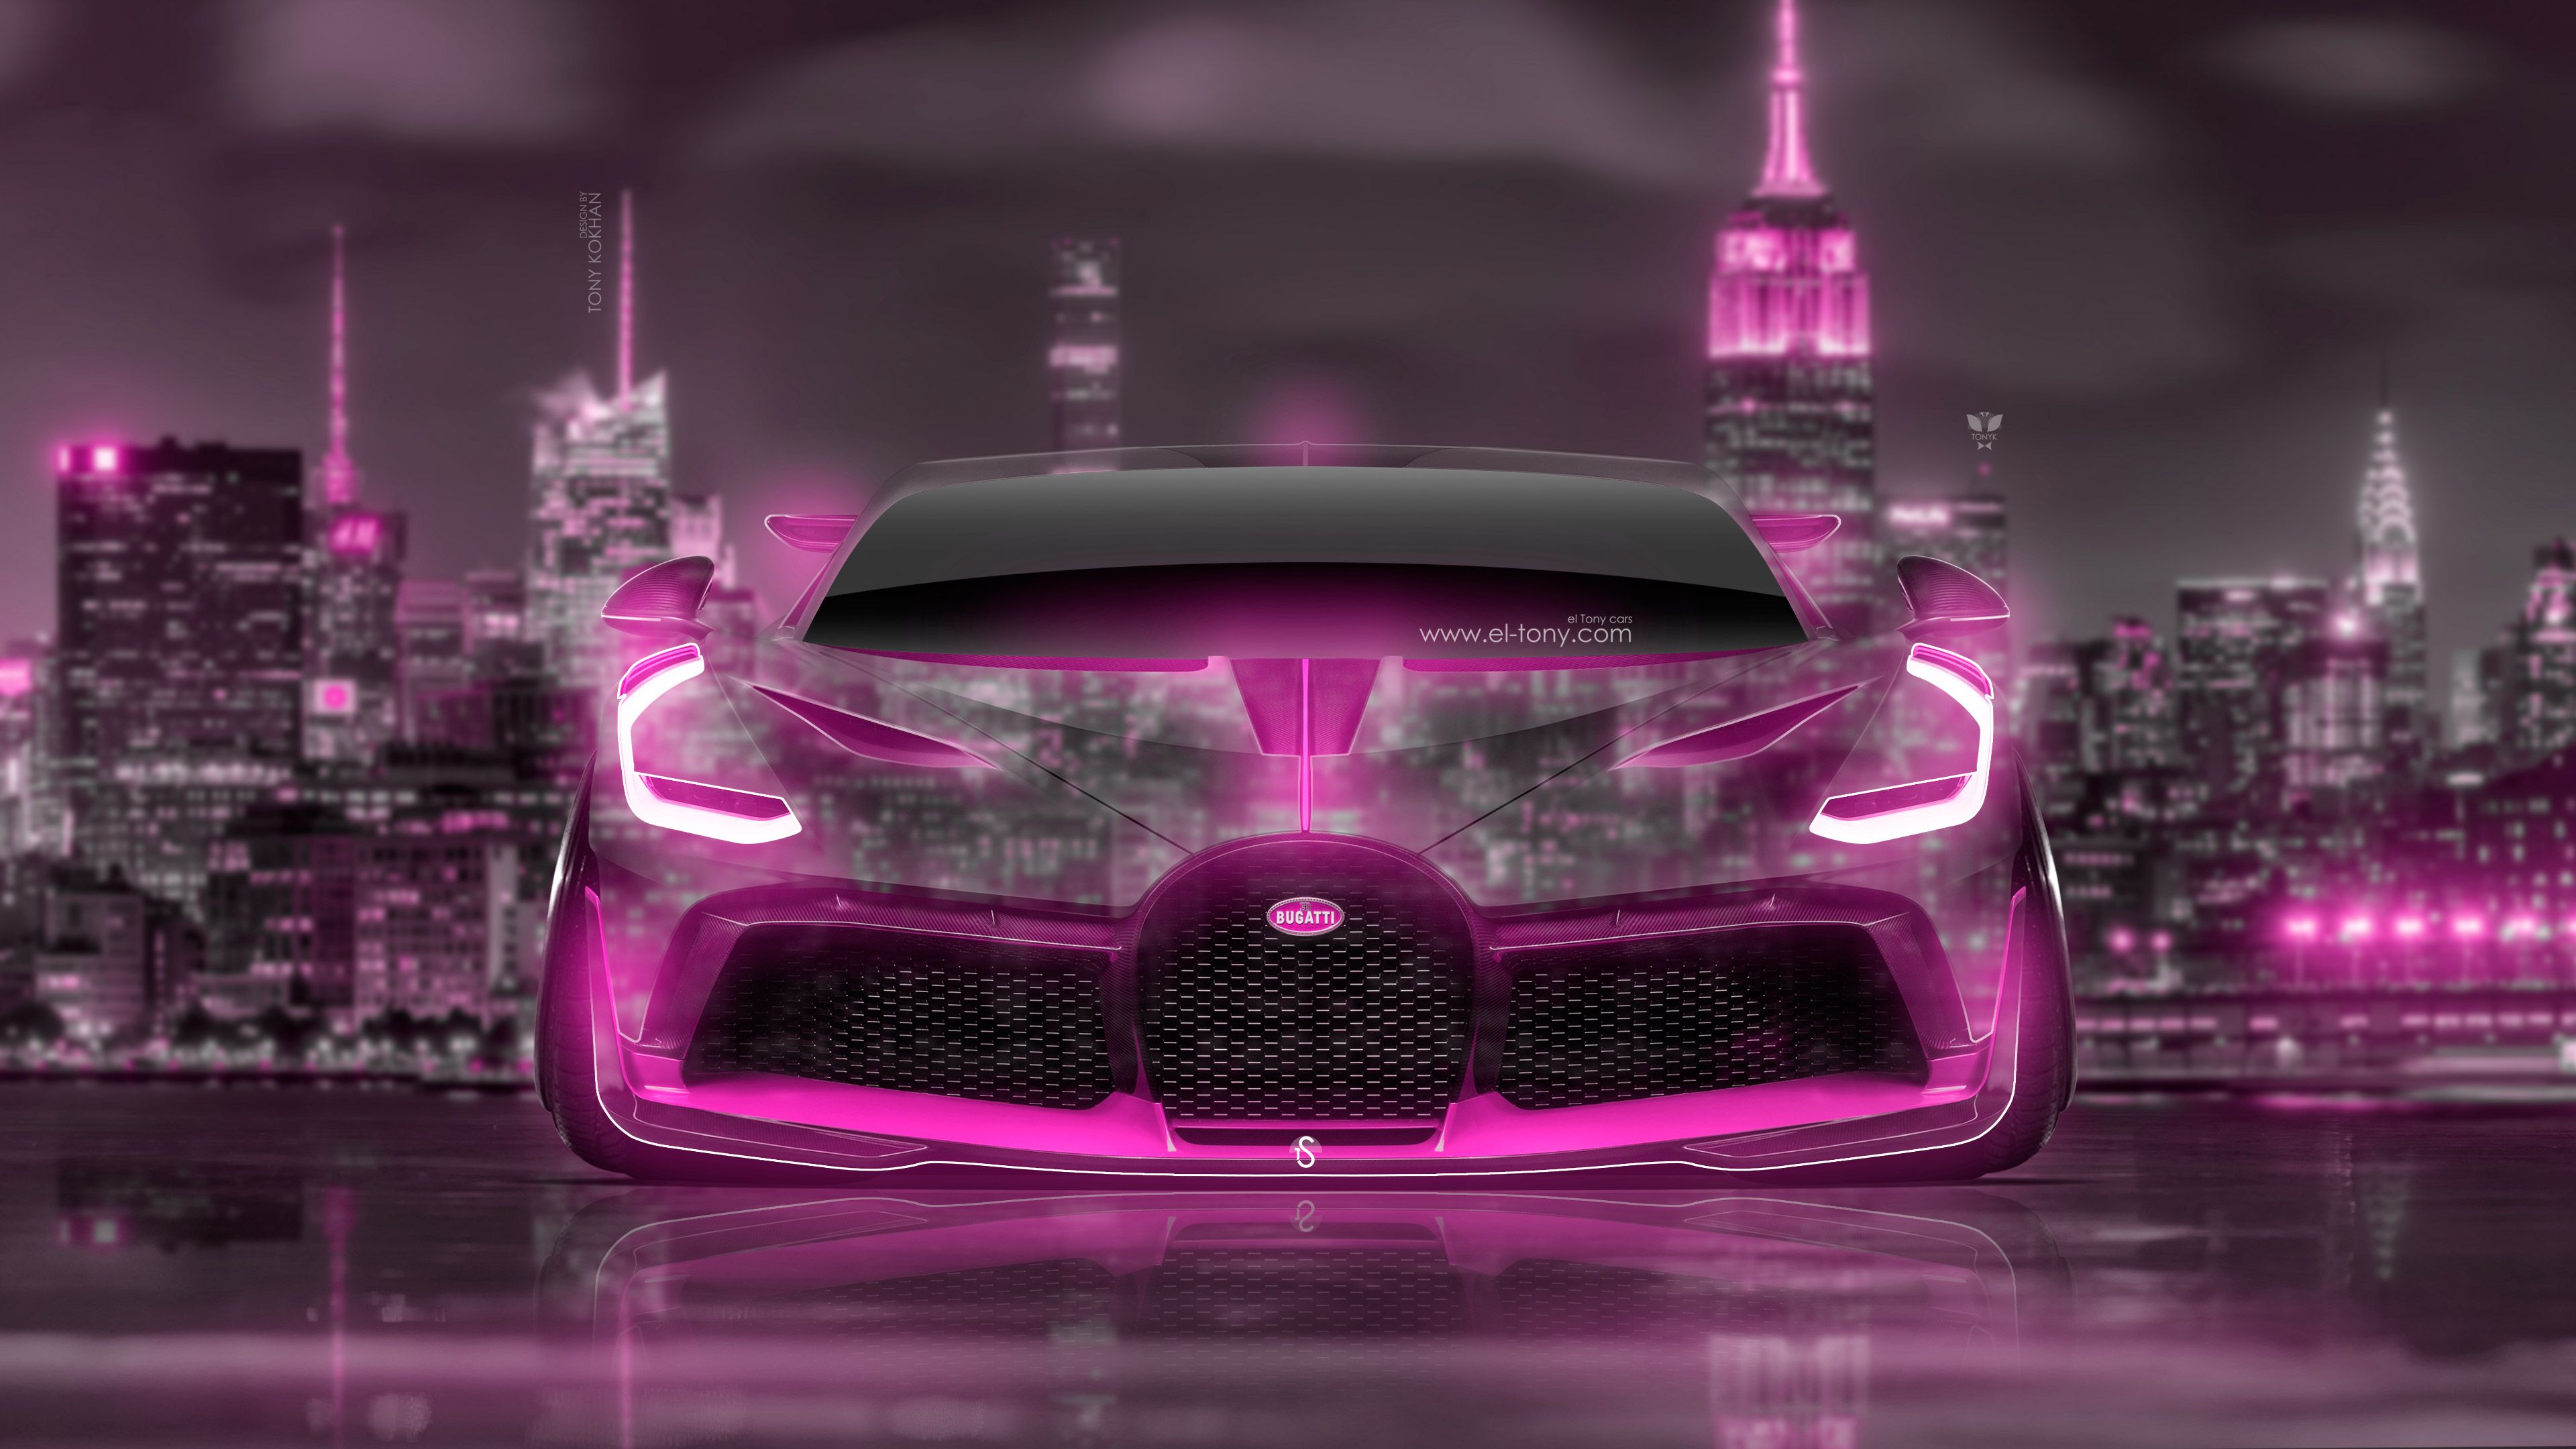 pink bugatti veyron wallpaper